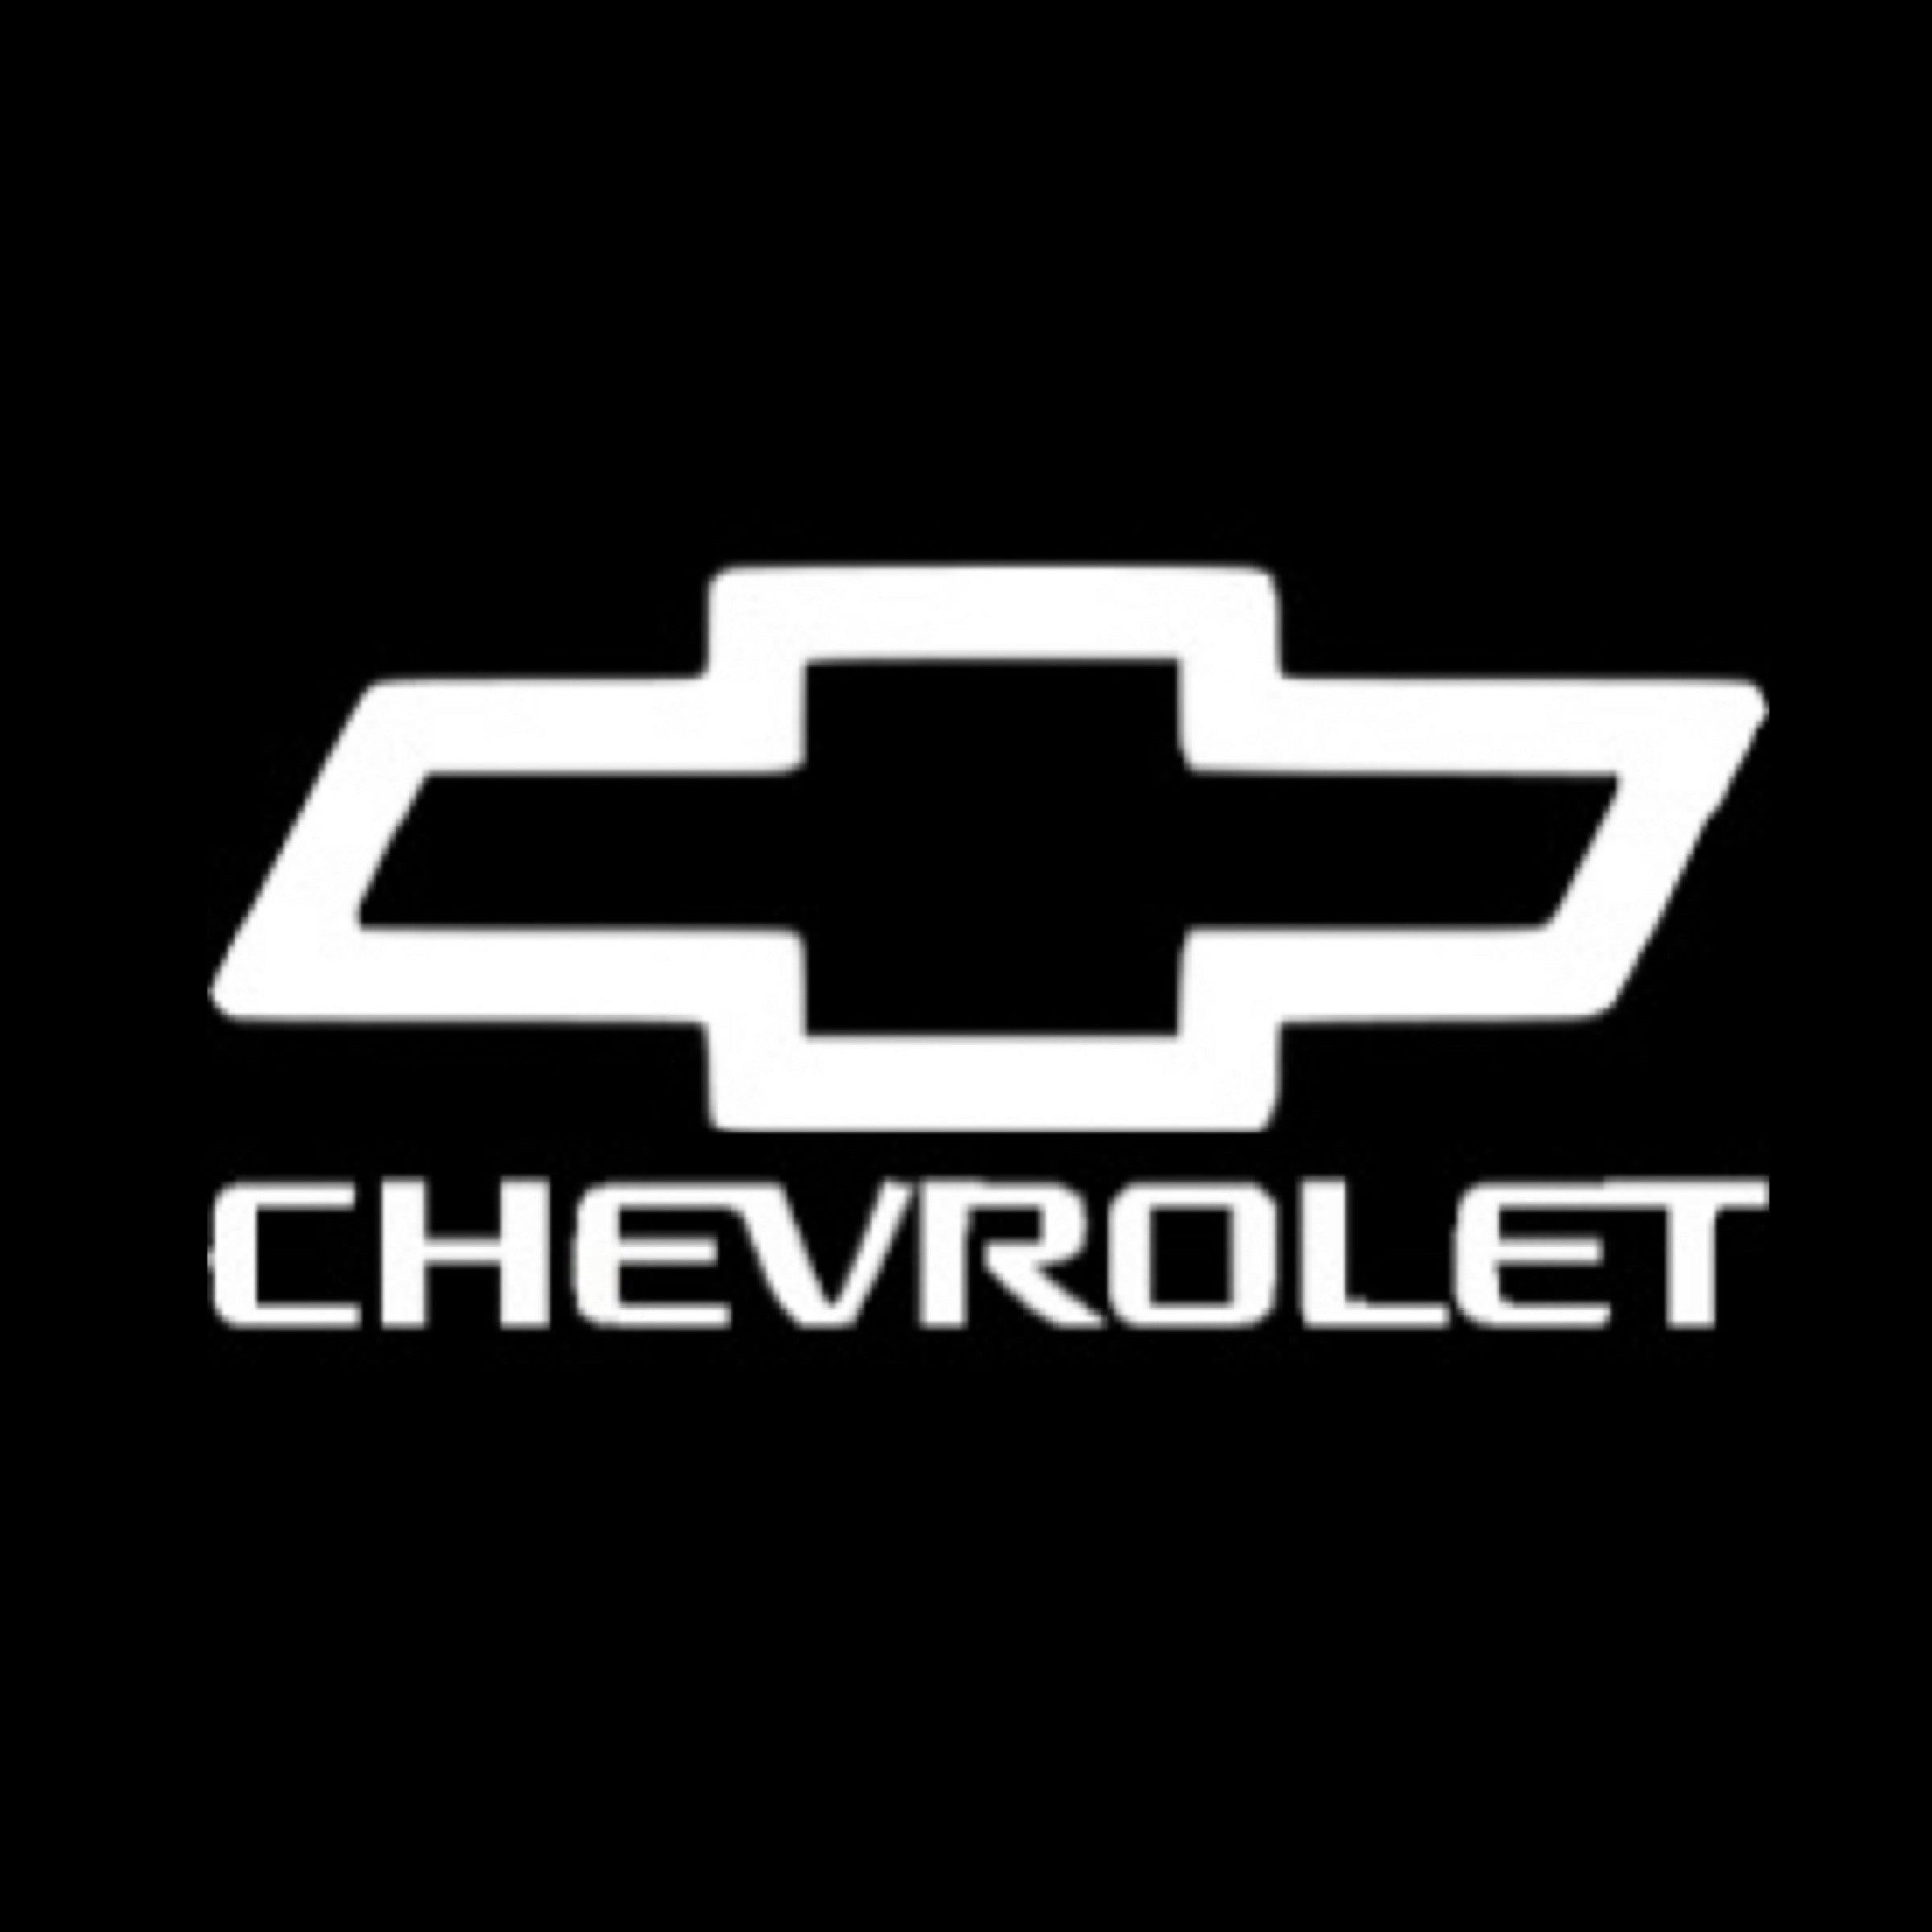 Chevrolet logo in white with black backdrop